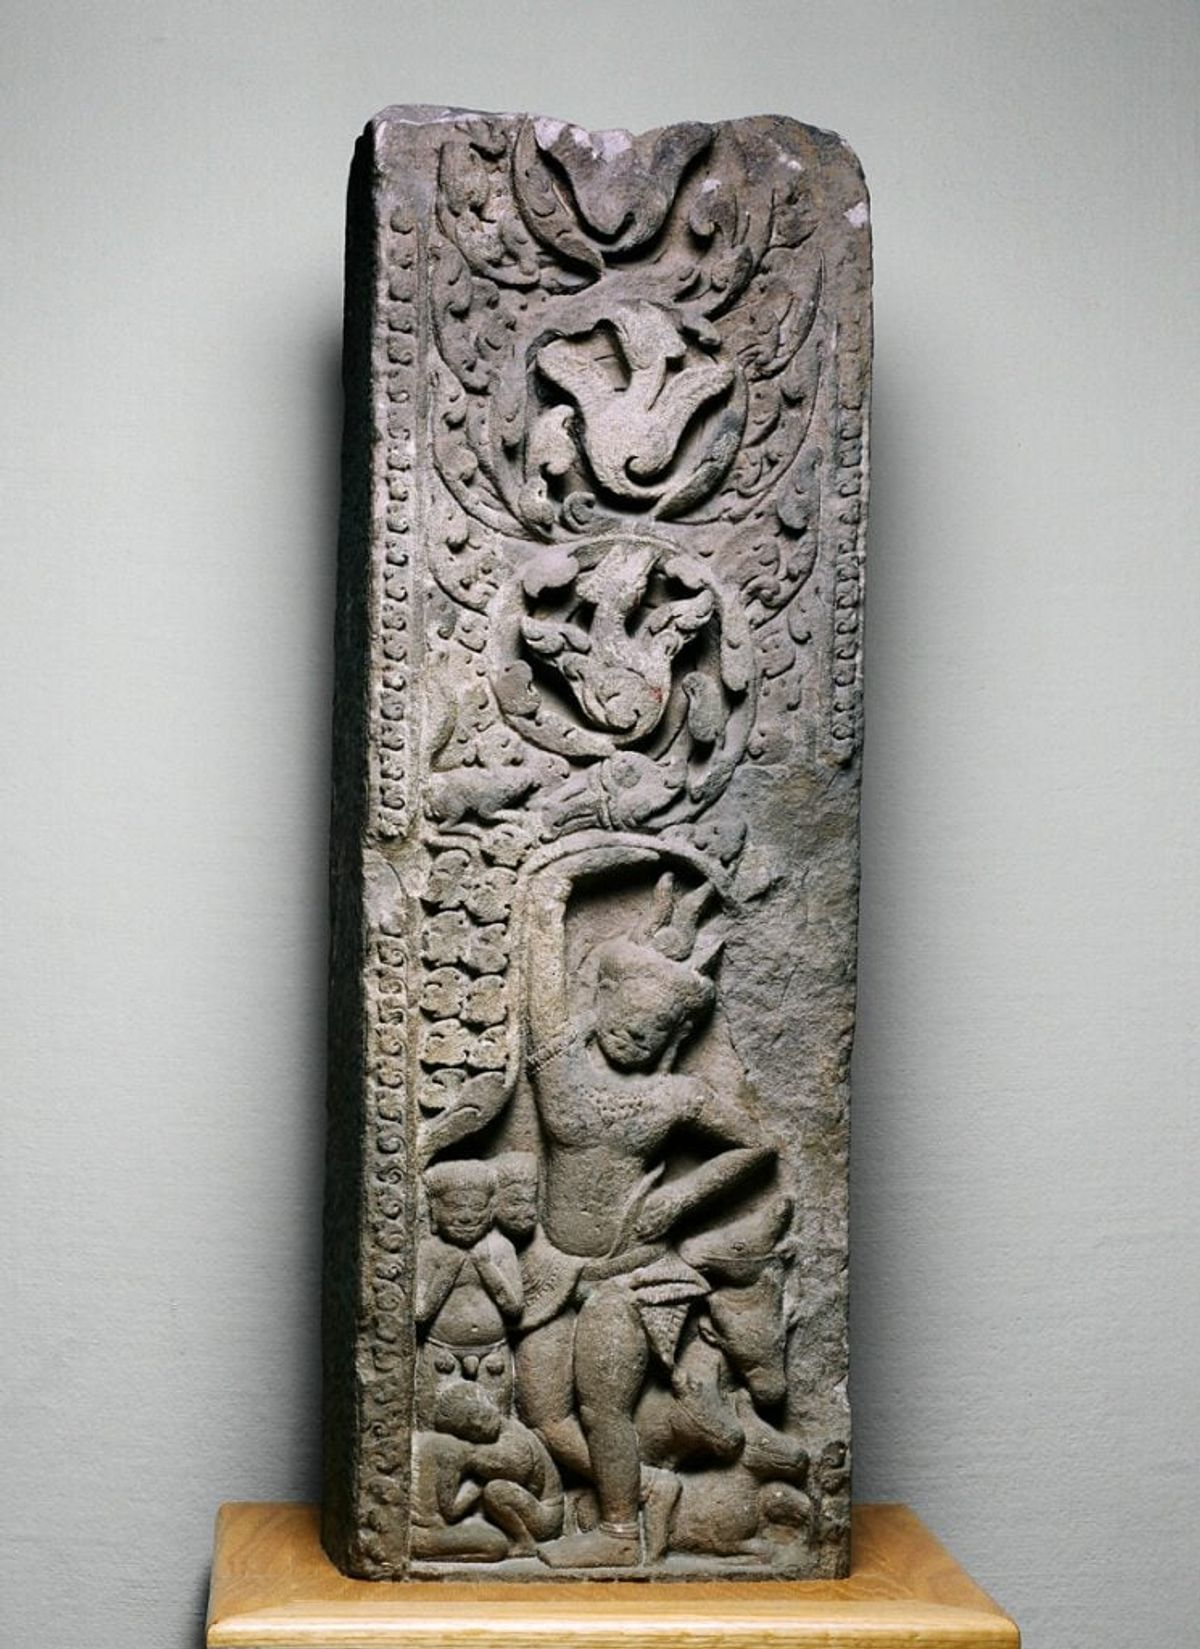 The decorative Krishna fragment Art Institute of Chicago 